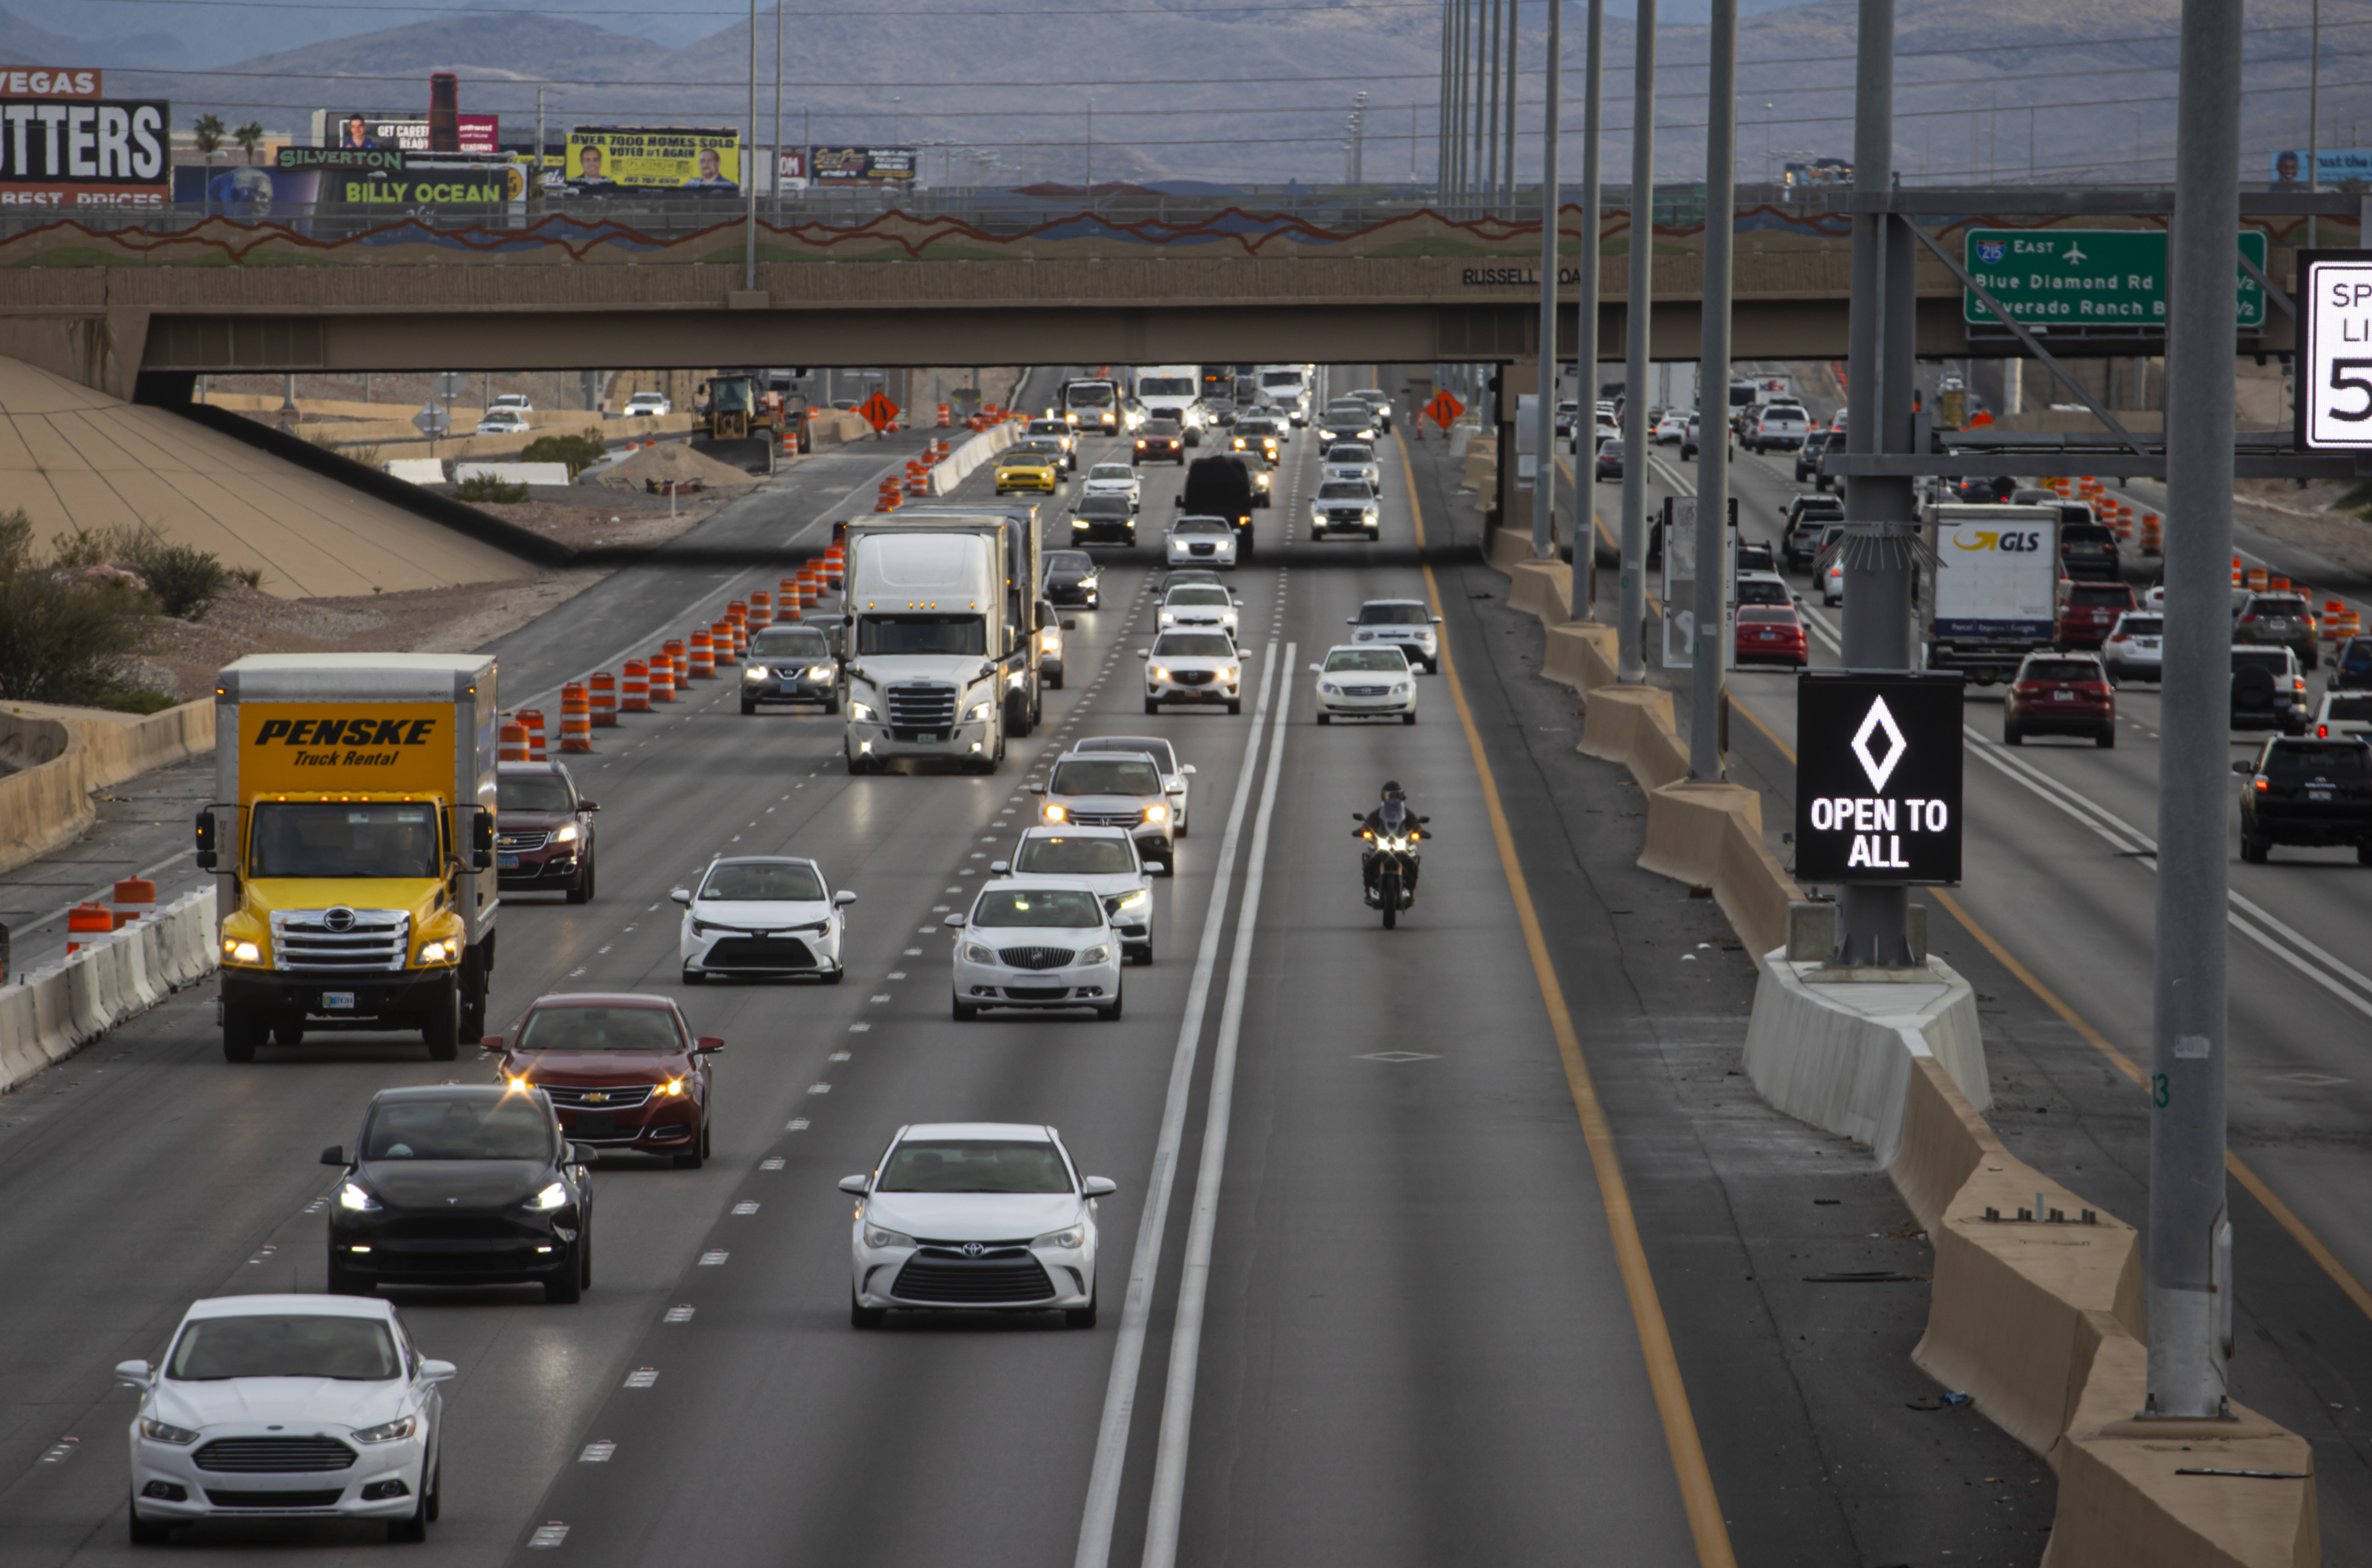 24/7 HOV lane regulations set to change this month